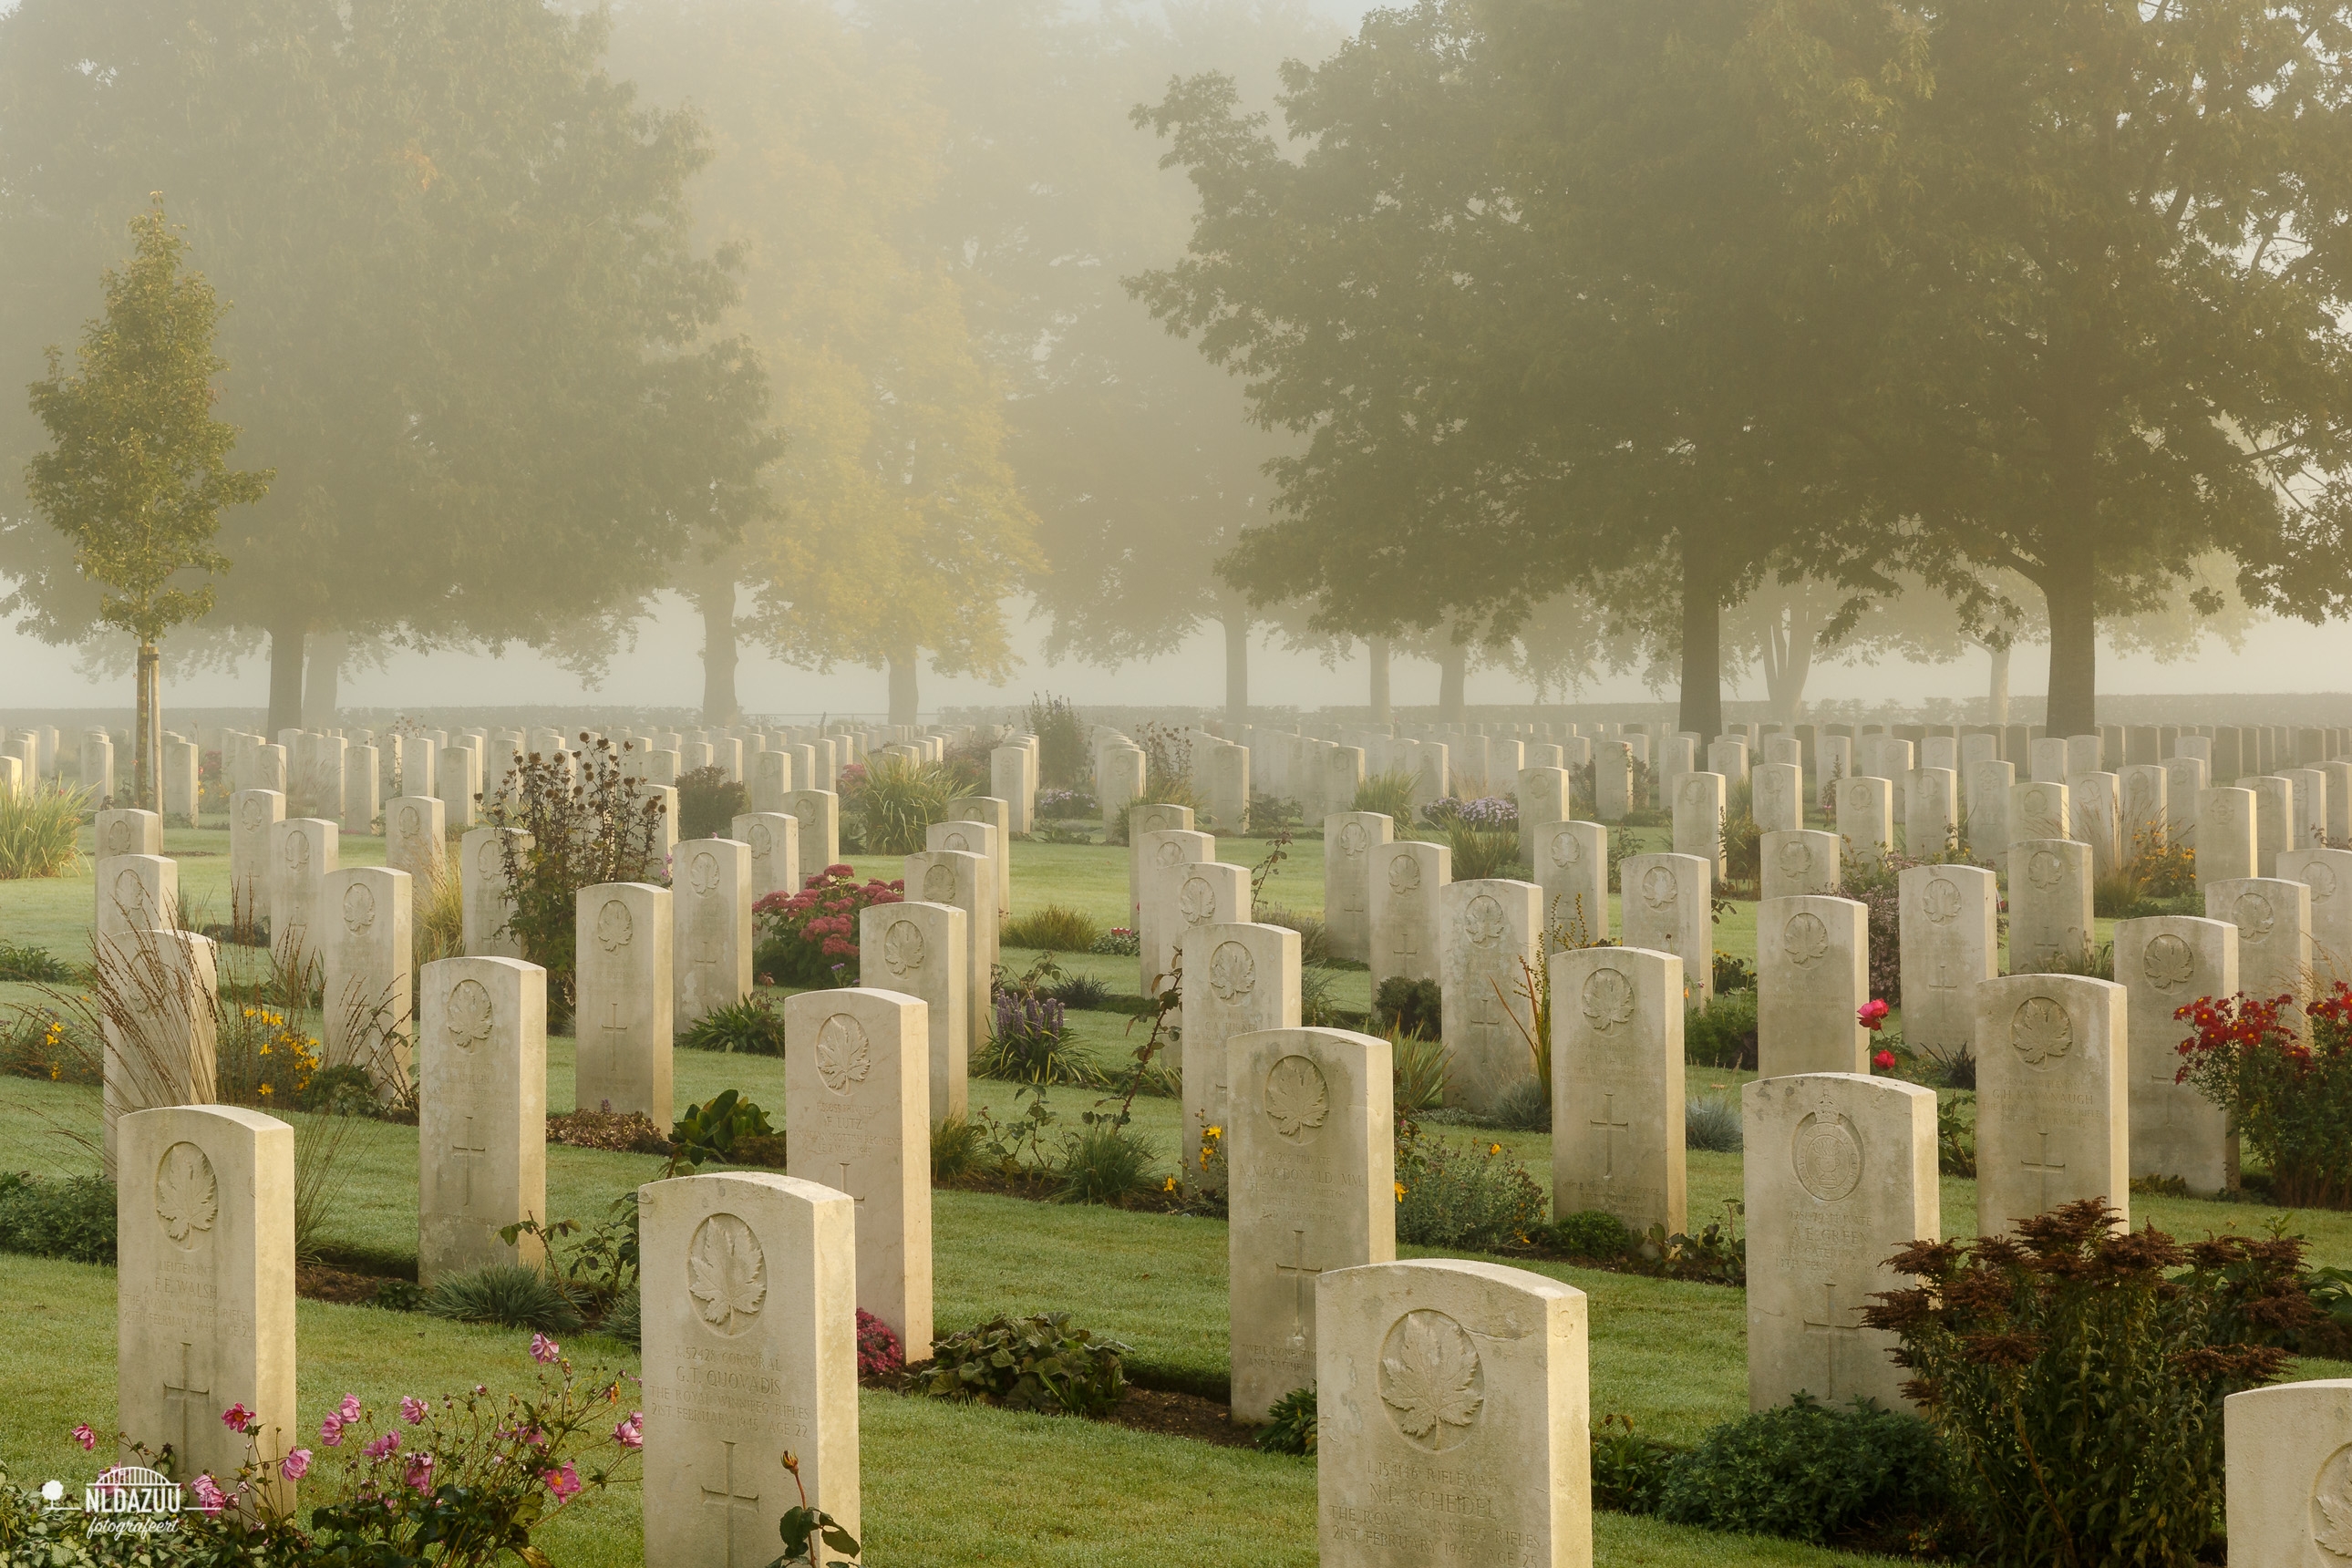 Militaire begraafplaats Groesbeek II